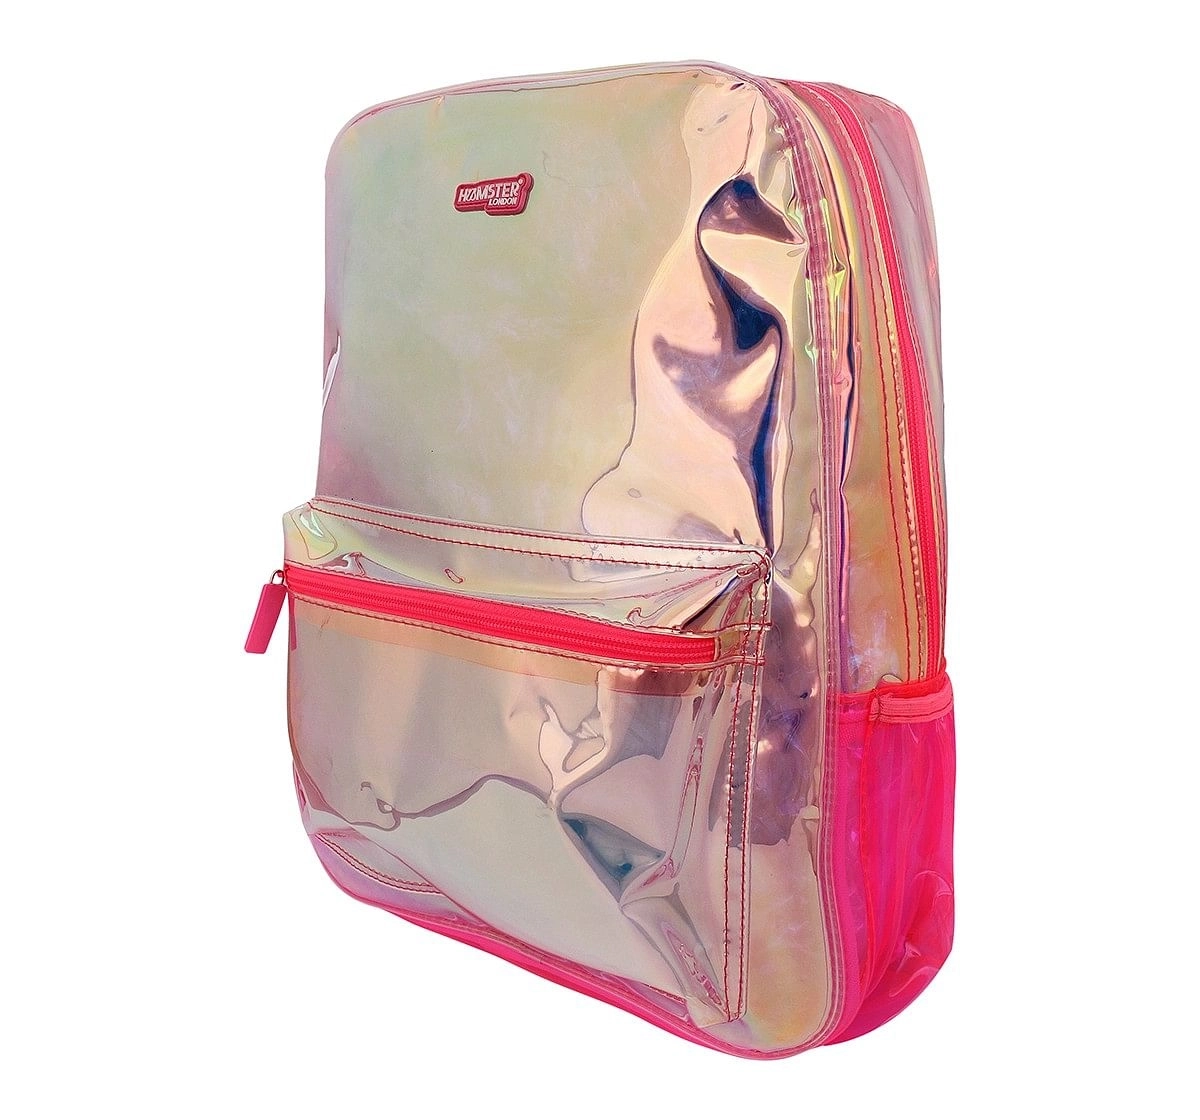 Hamster London Big Backpack for age 3Y+ (Pink)